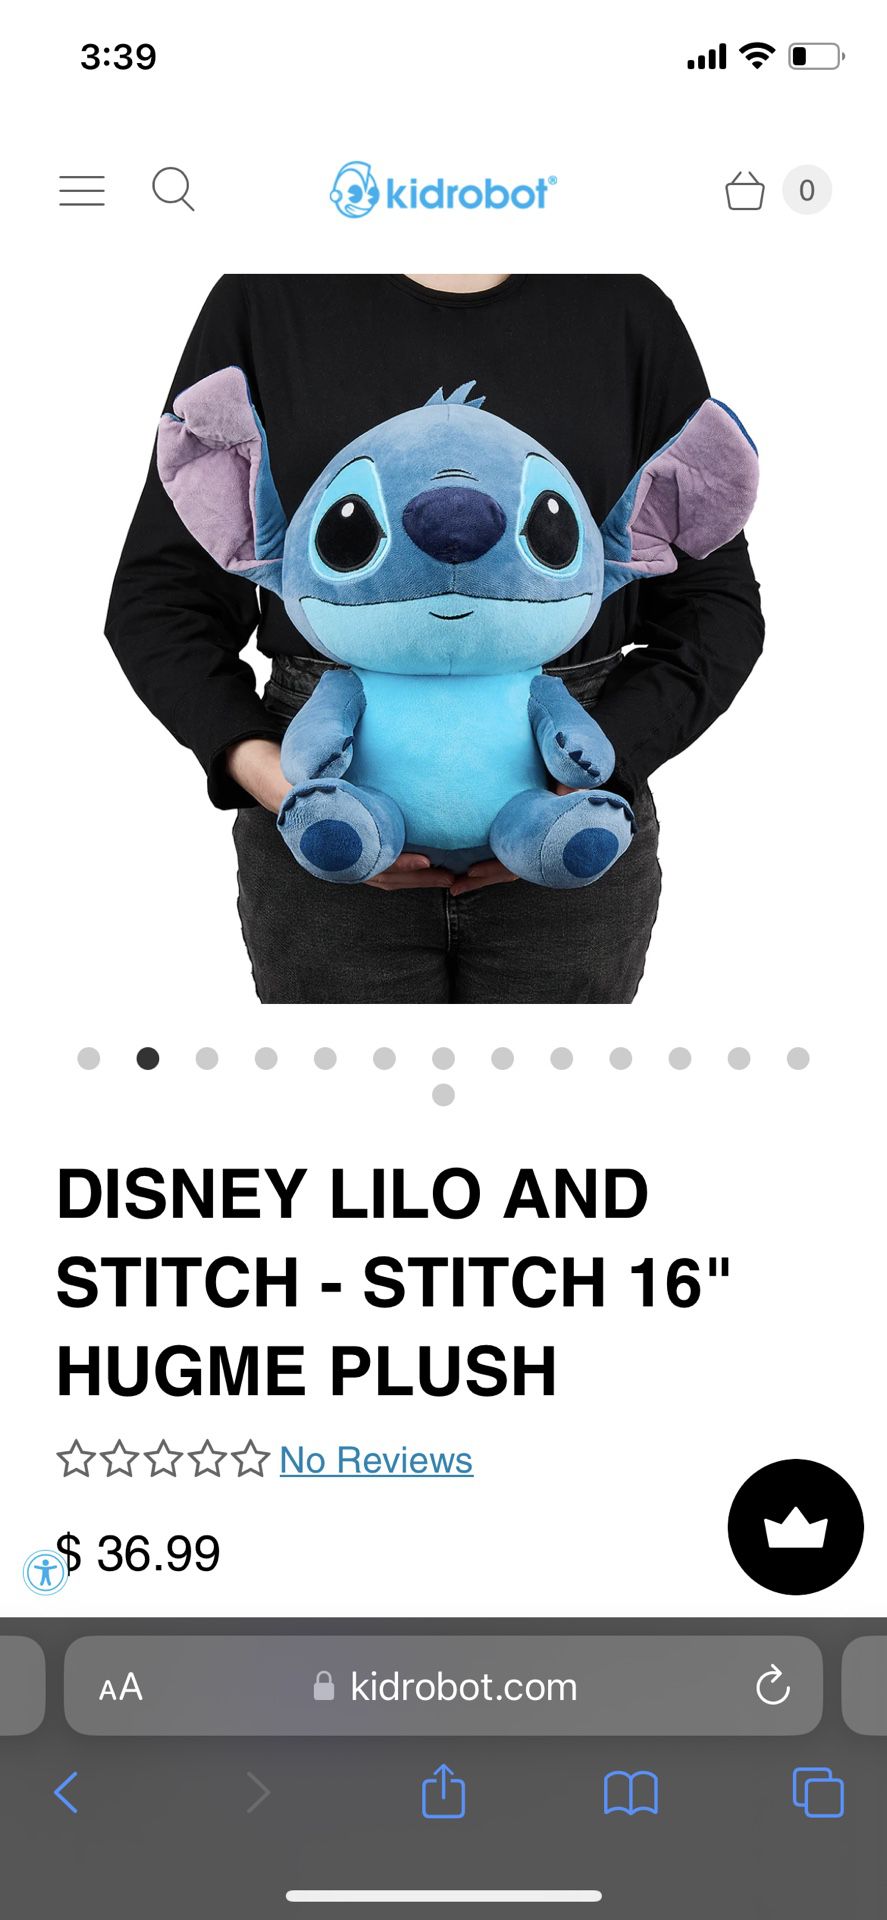 Disney Lilo and Stitch - Stitch 16 HugMe Plush